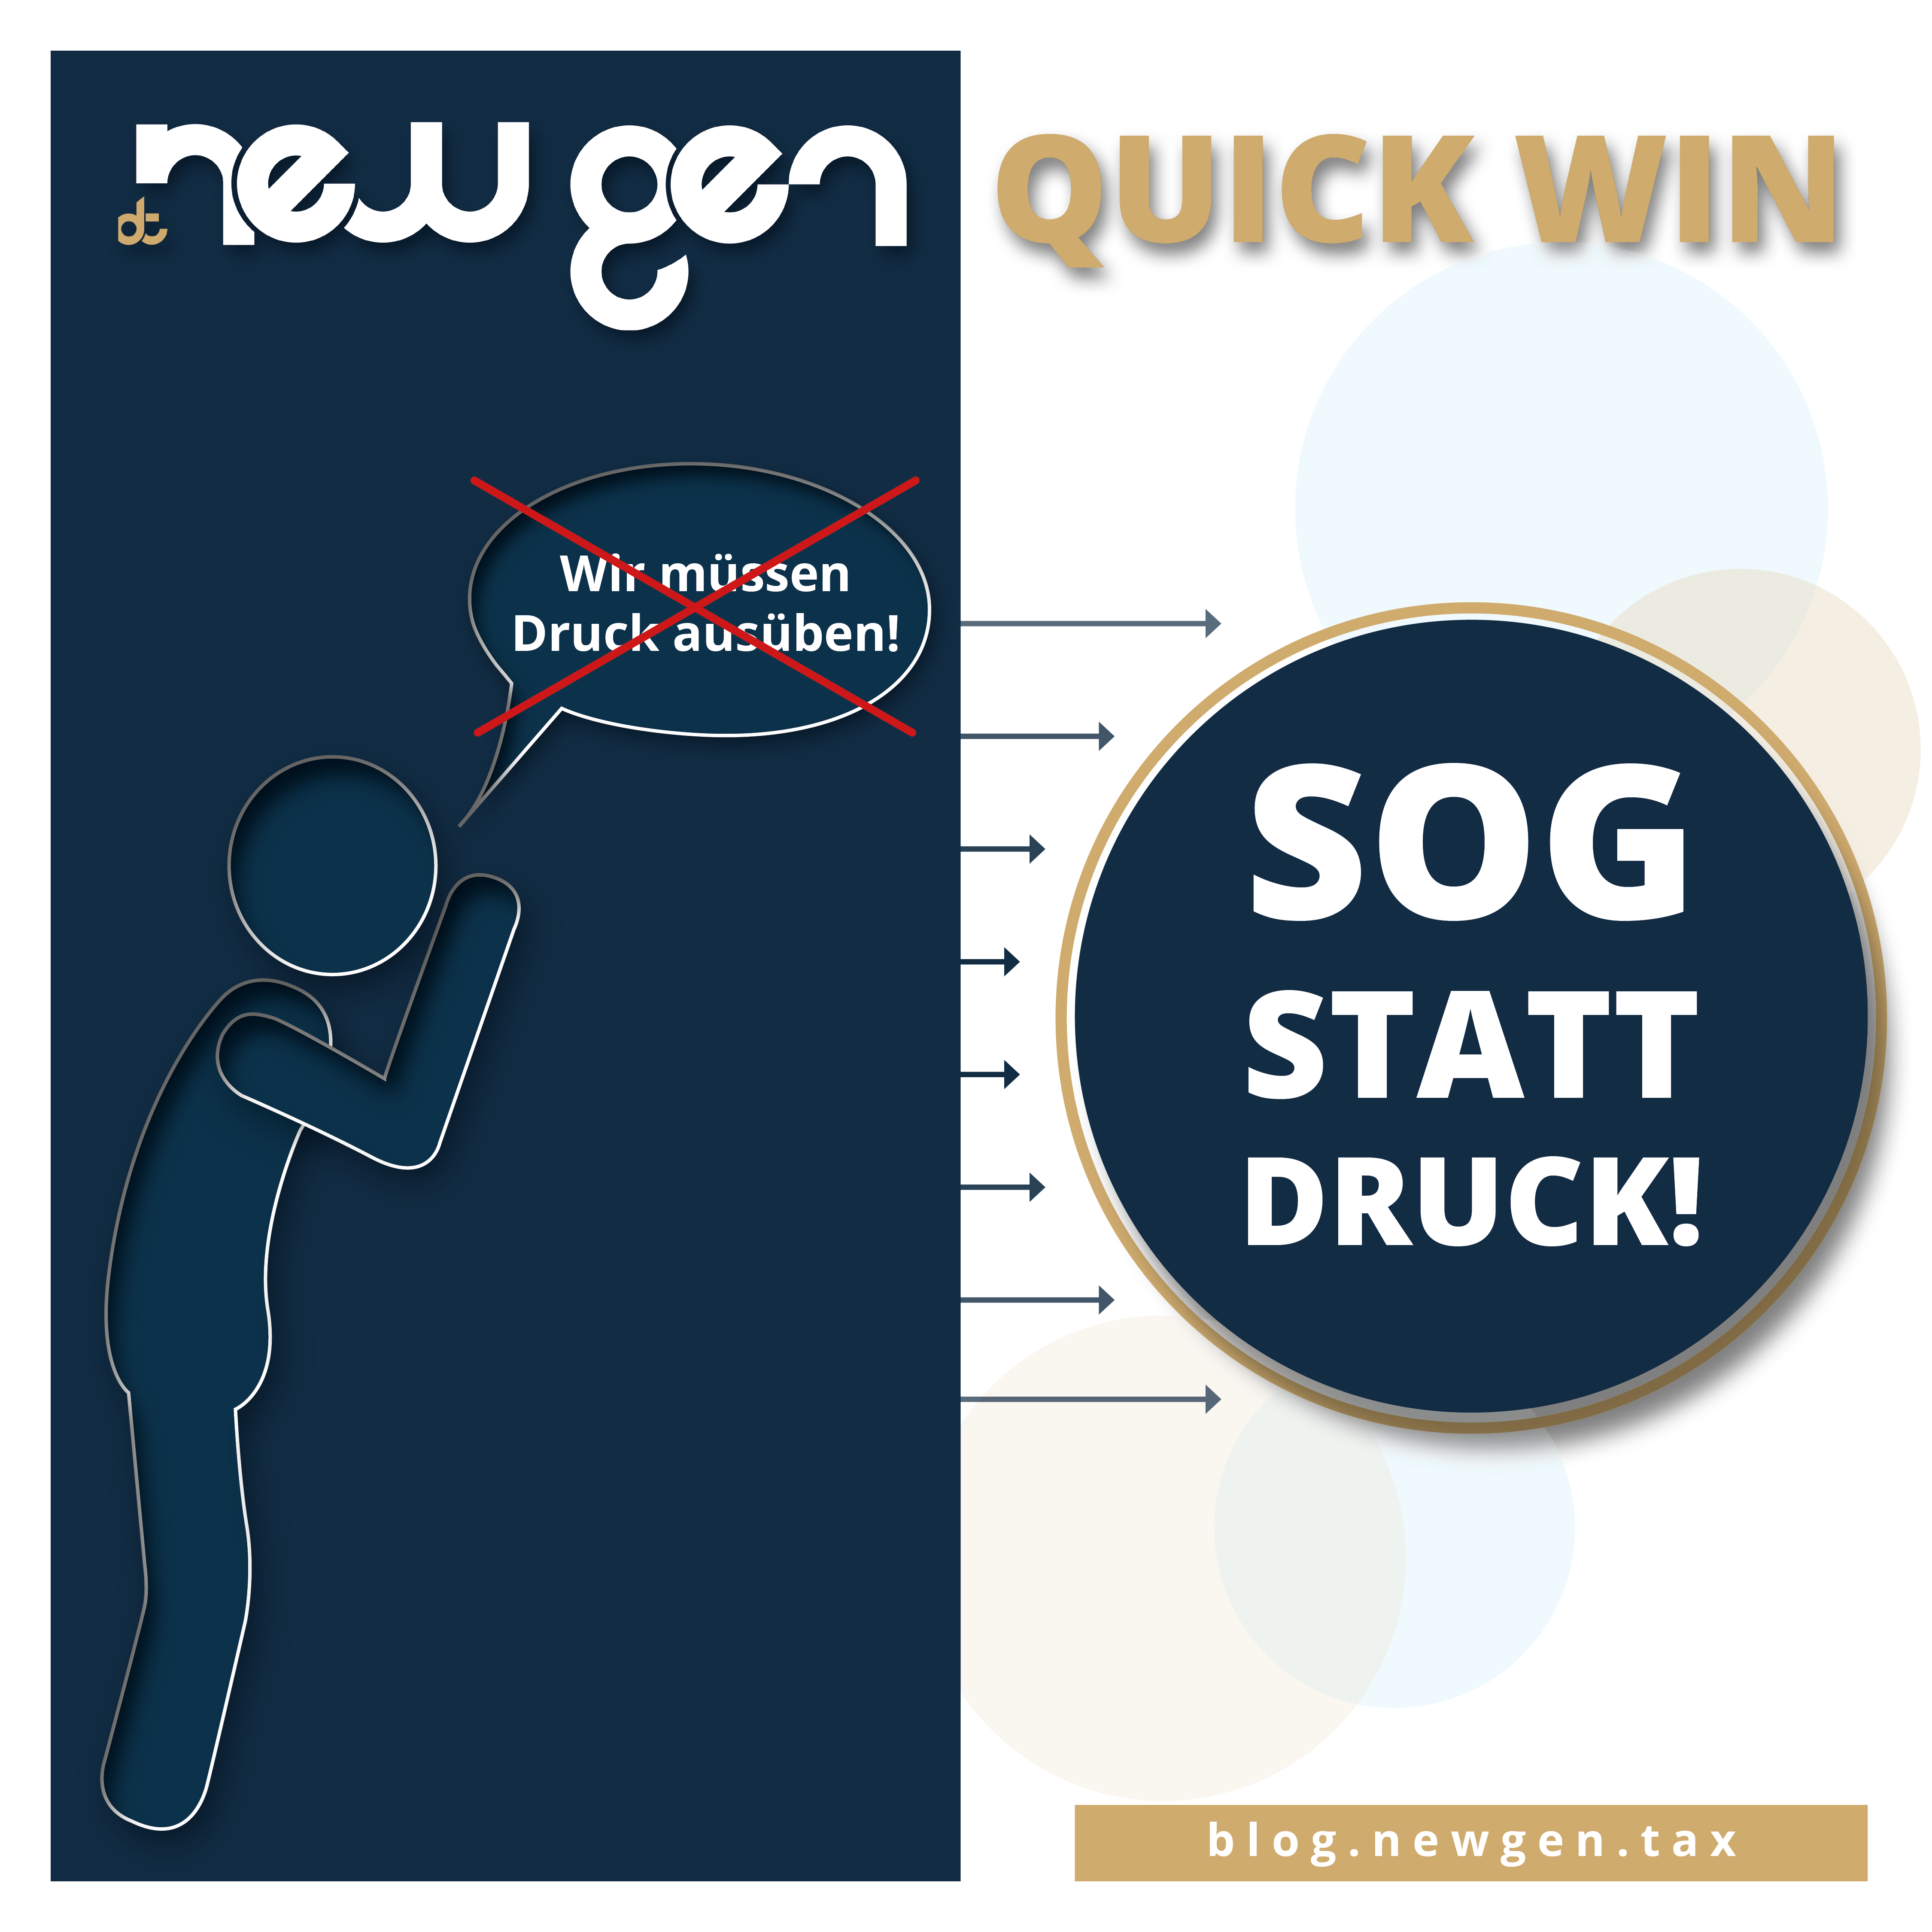 new gen Quick Win - Sog statt Druck